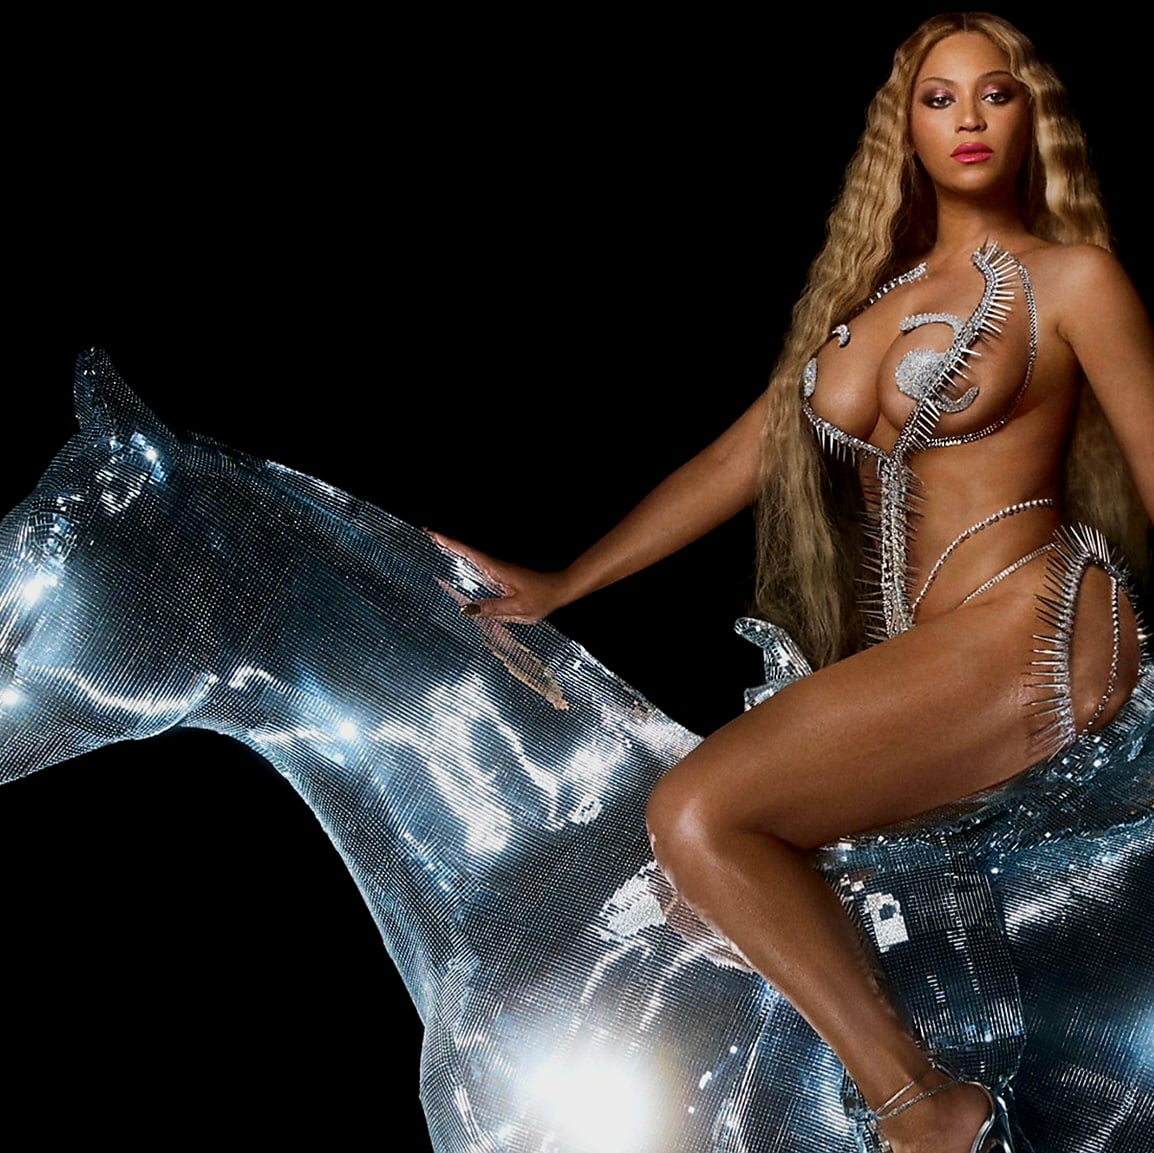 Beyoncé renaissance album cover via 360 MAGAZINE